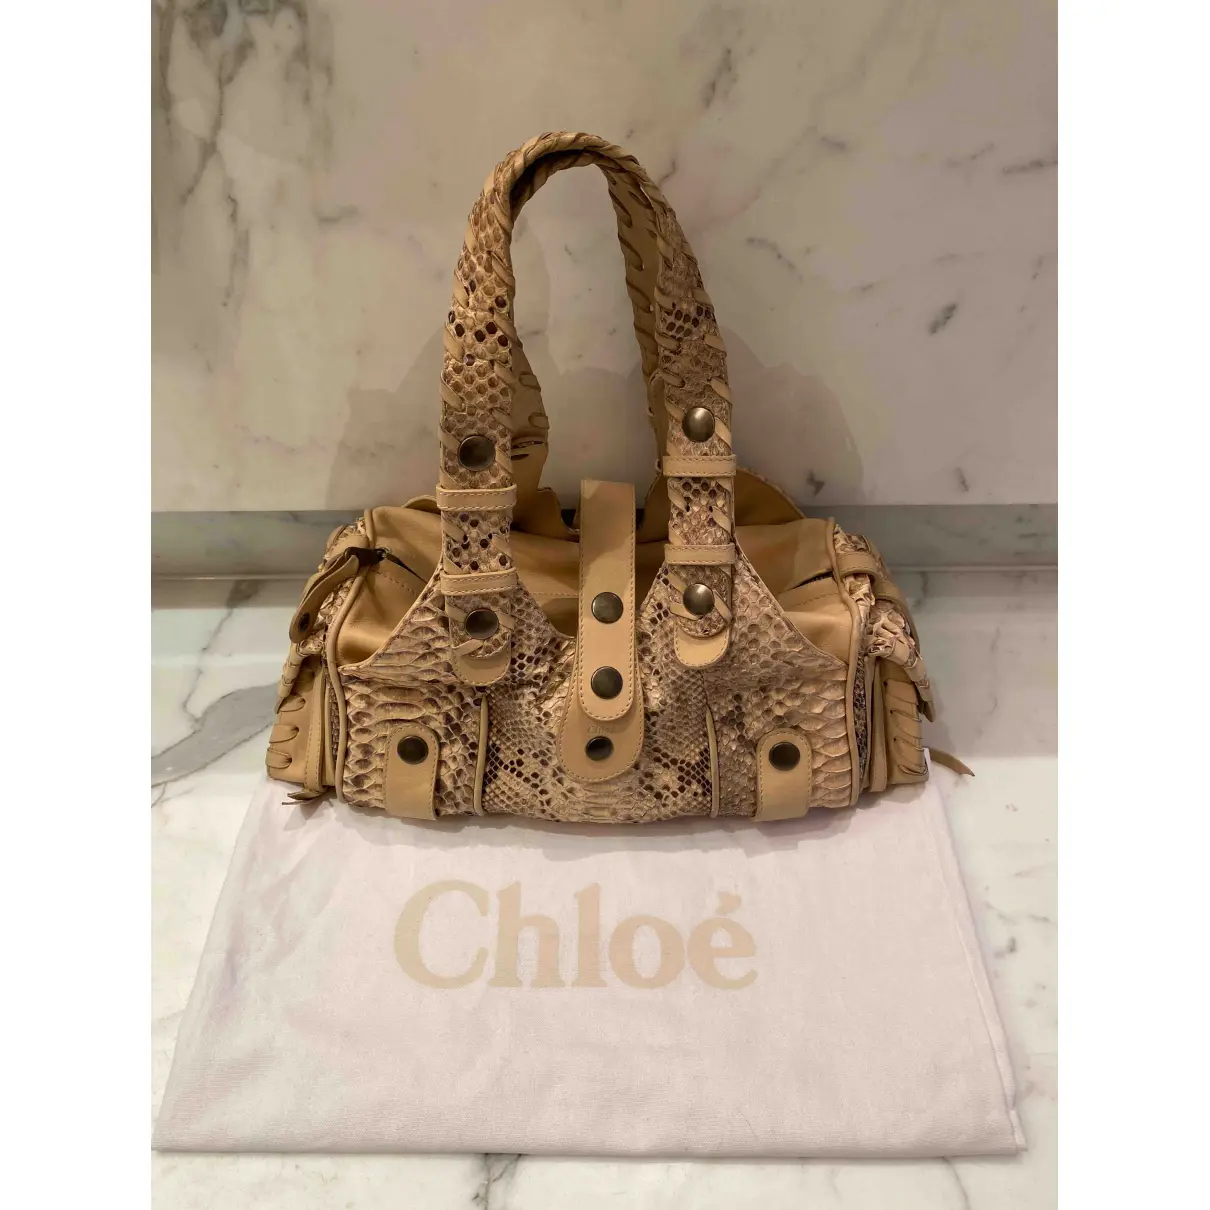 Buy Chloé Silverado python bowling bag online